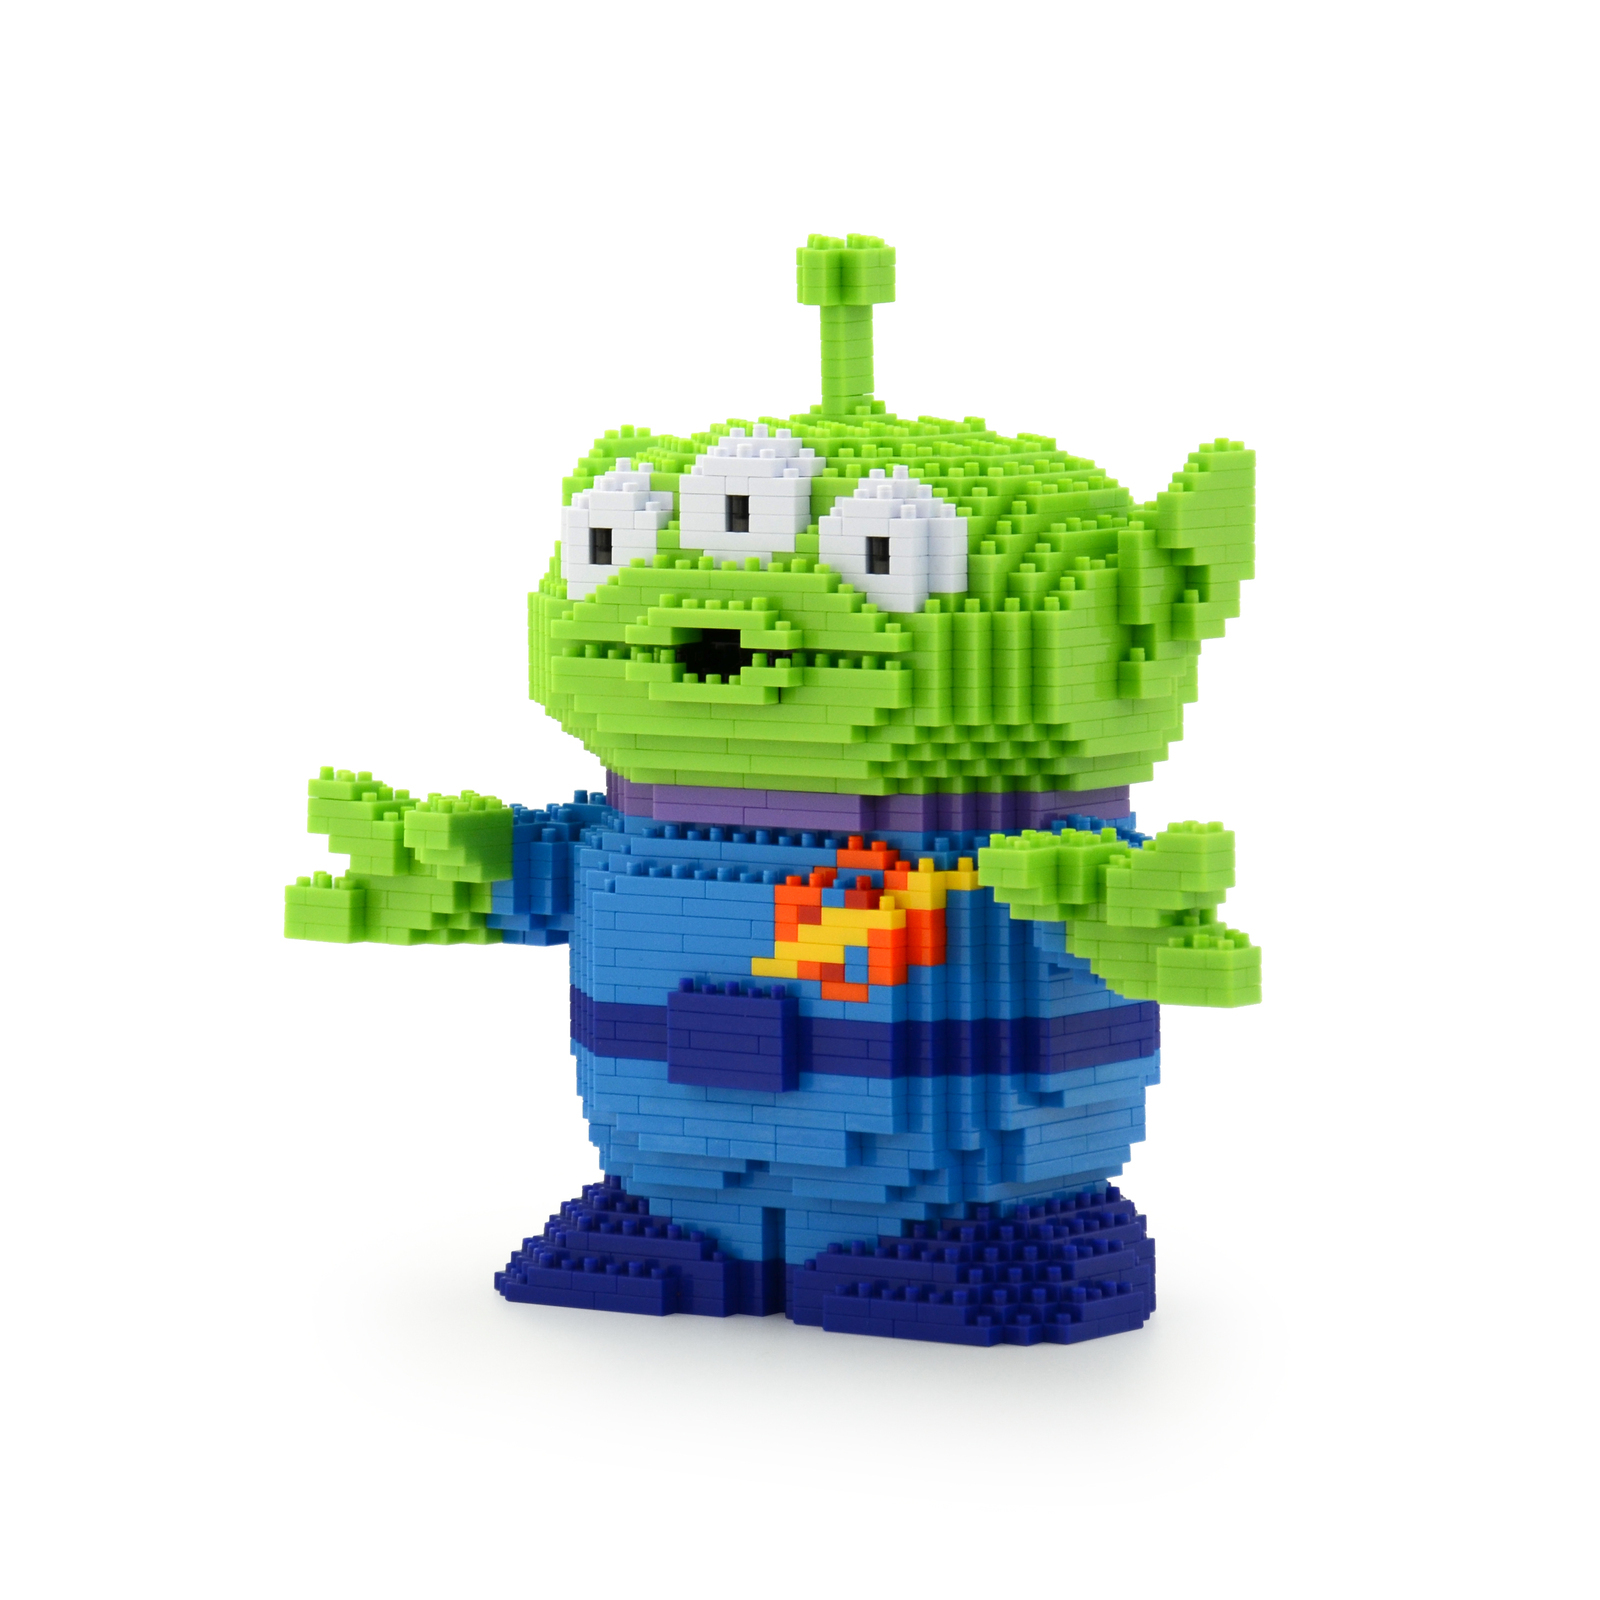 Primary image for Alien (Toy Story) Brick Sculpture (JEKCA Lego Brick) DIY Kit